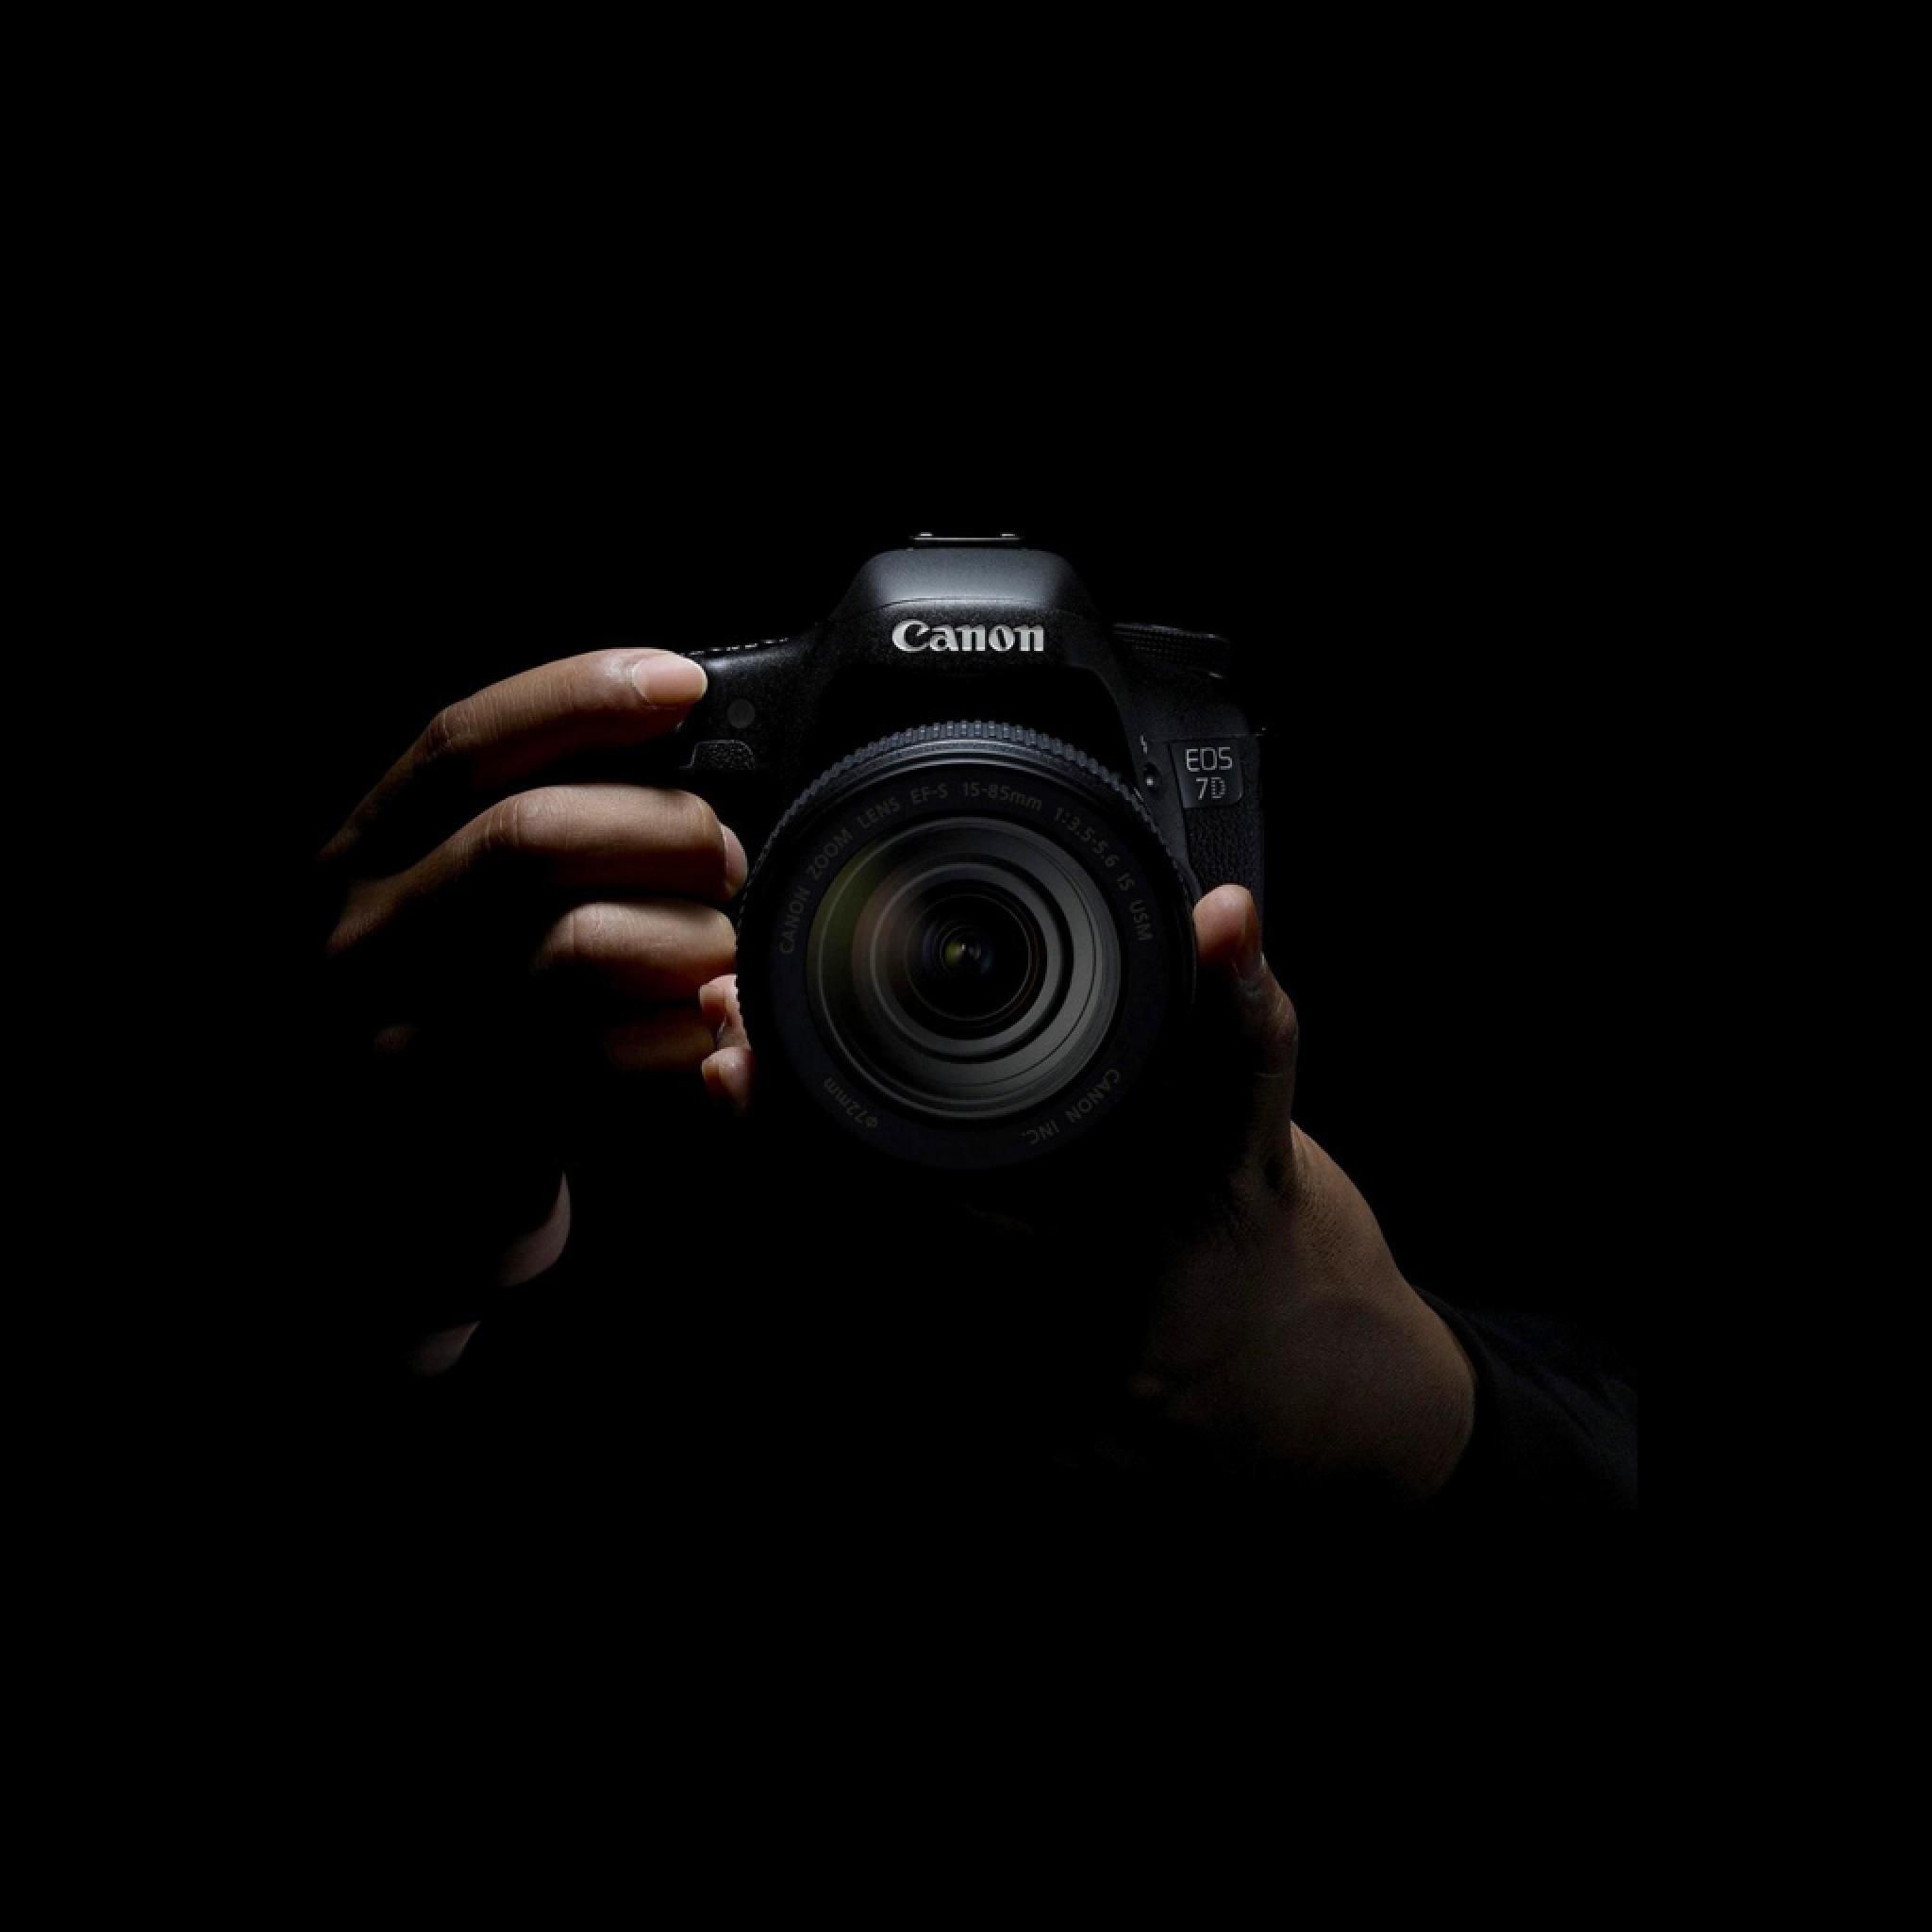 black photographer with camera